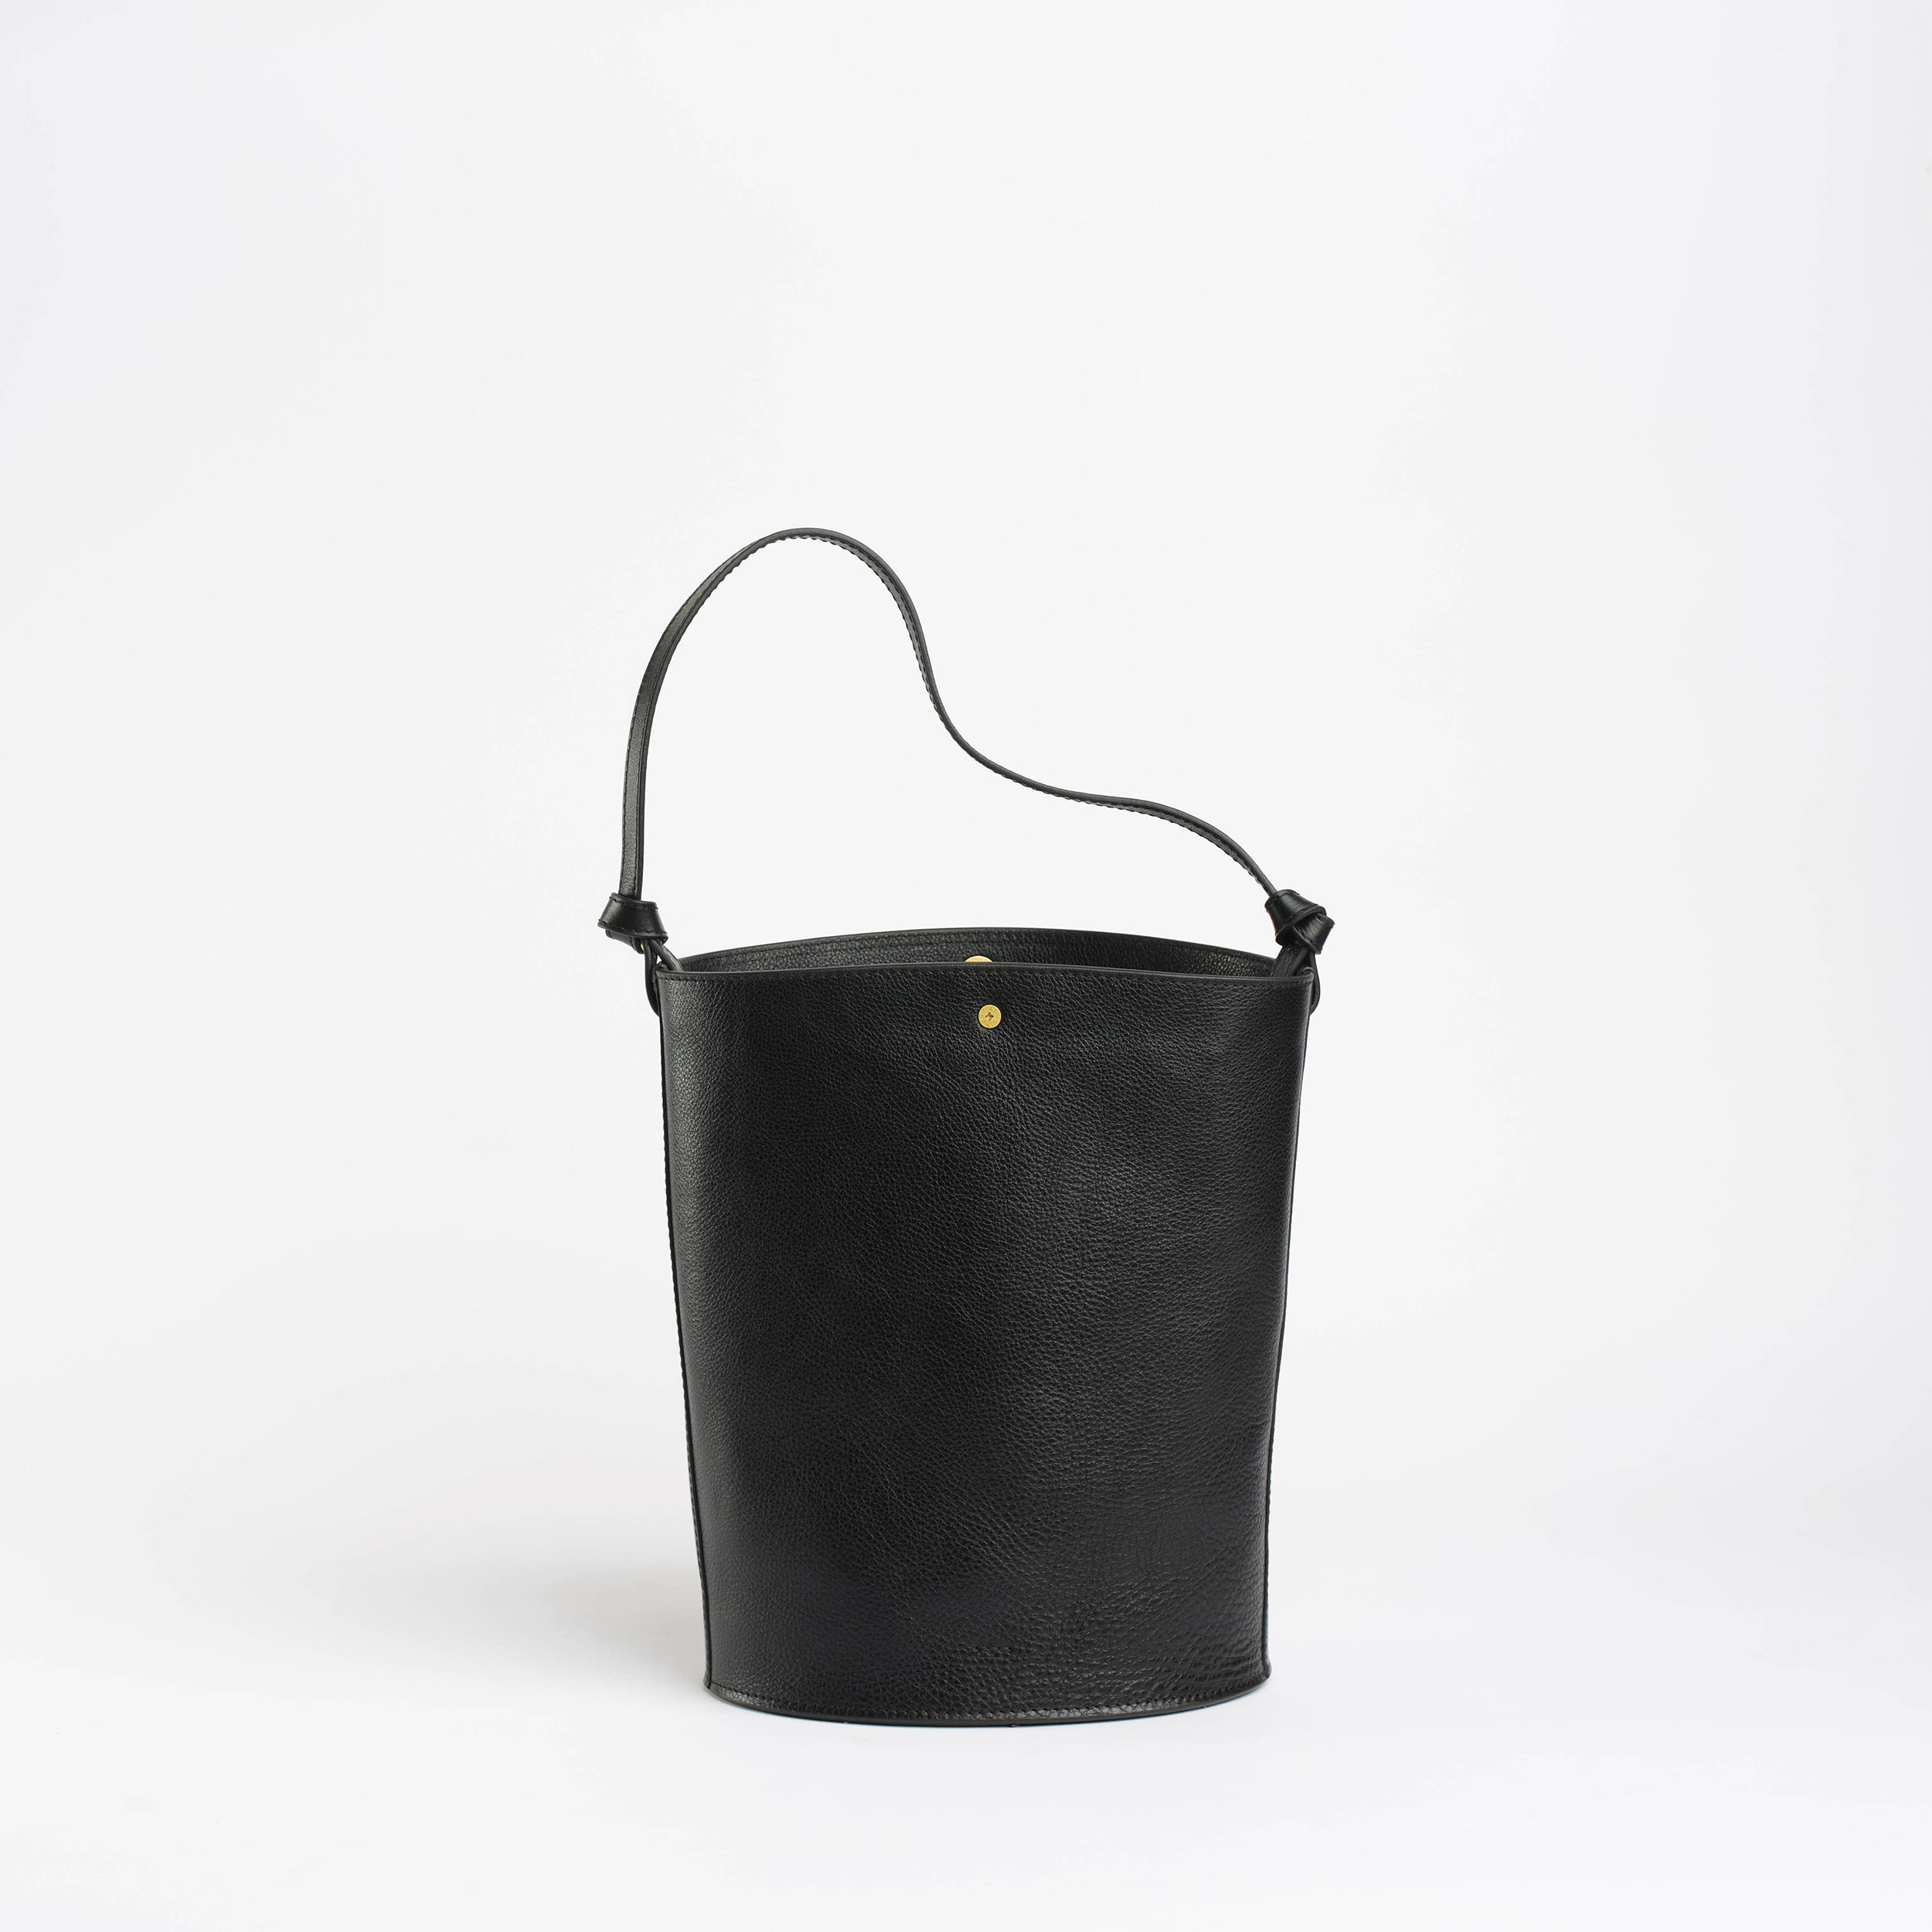  Other Stories cross body bucket bag in black